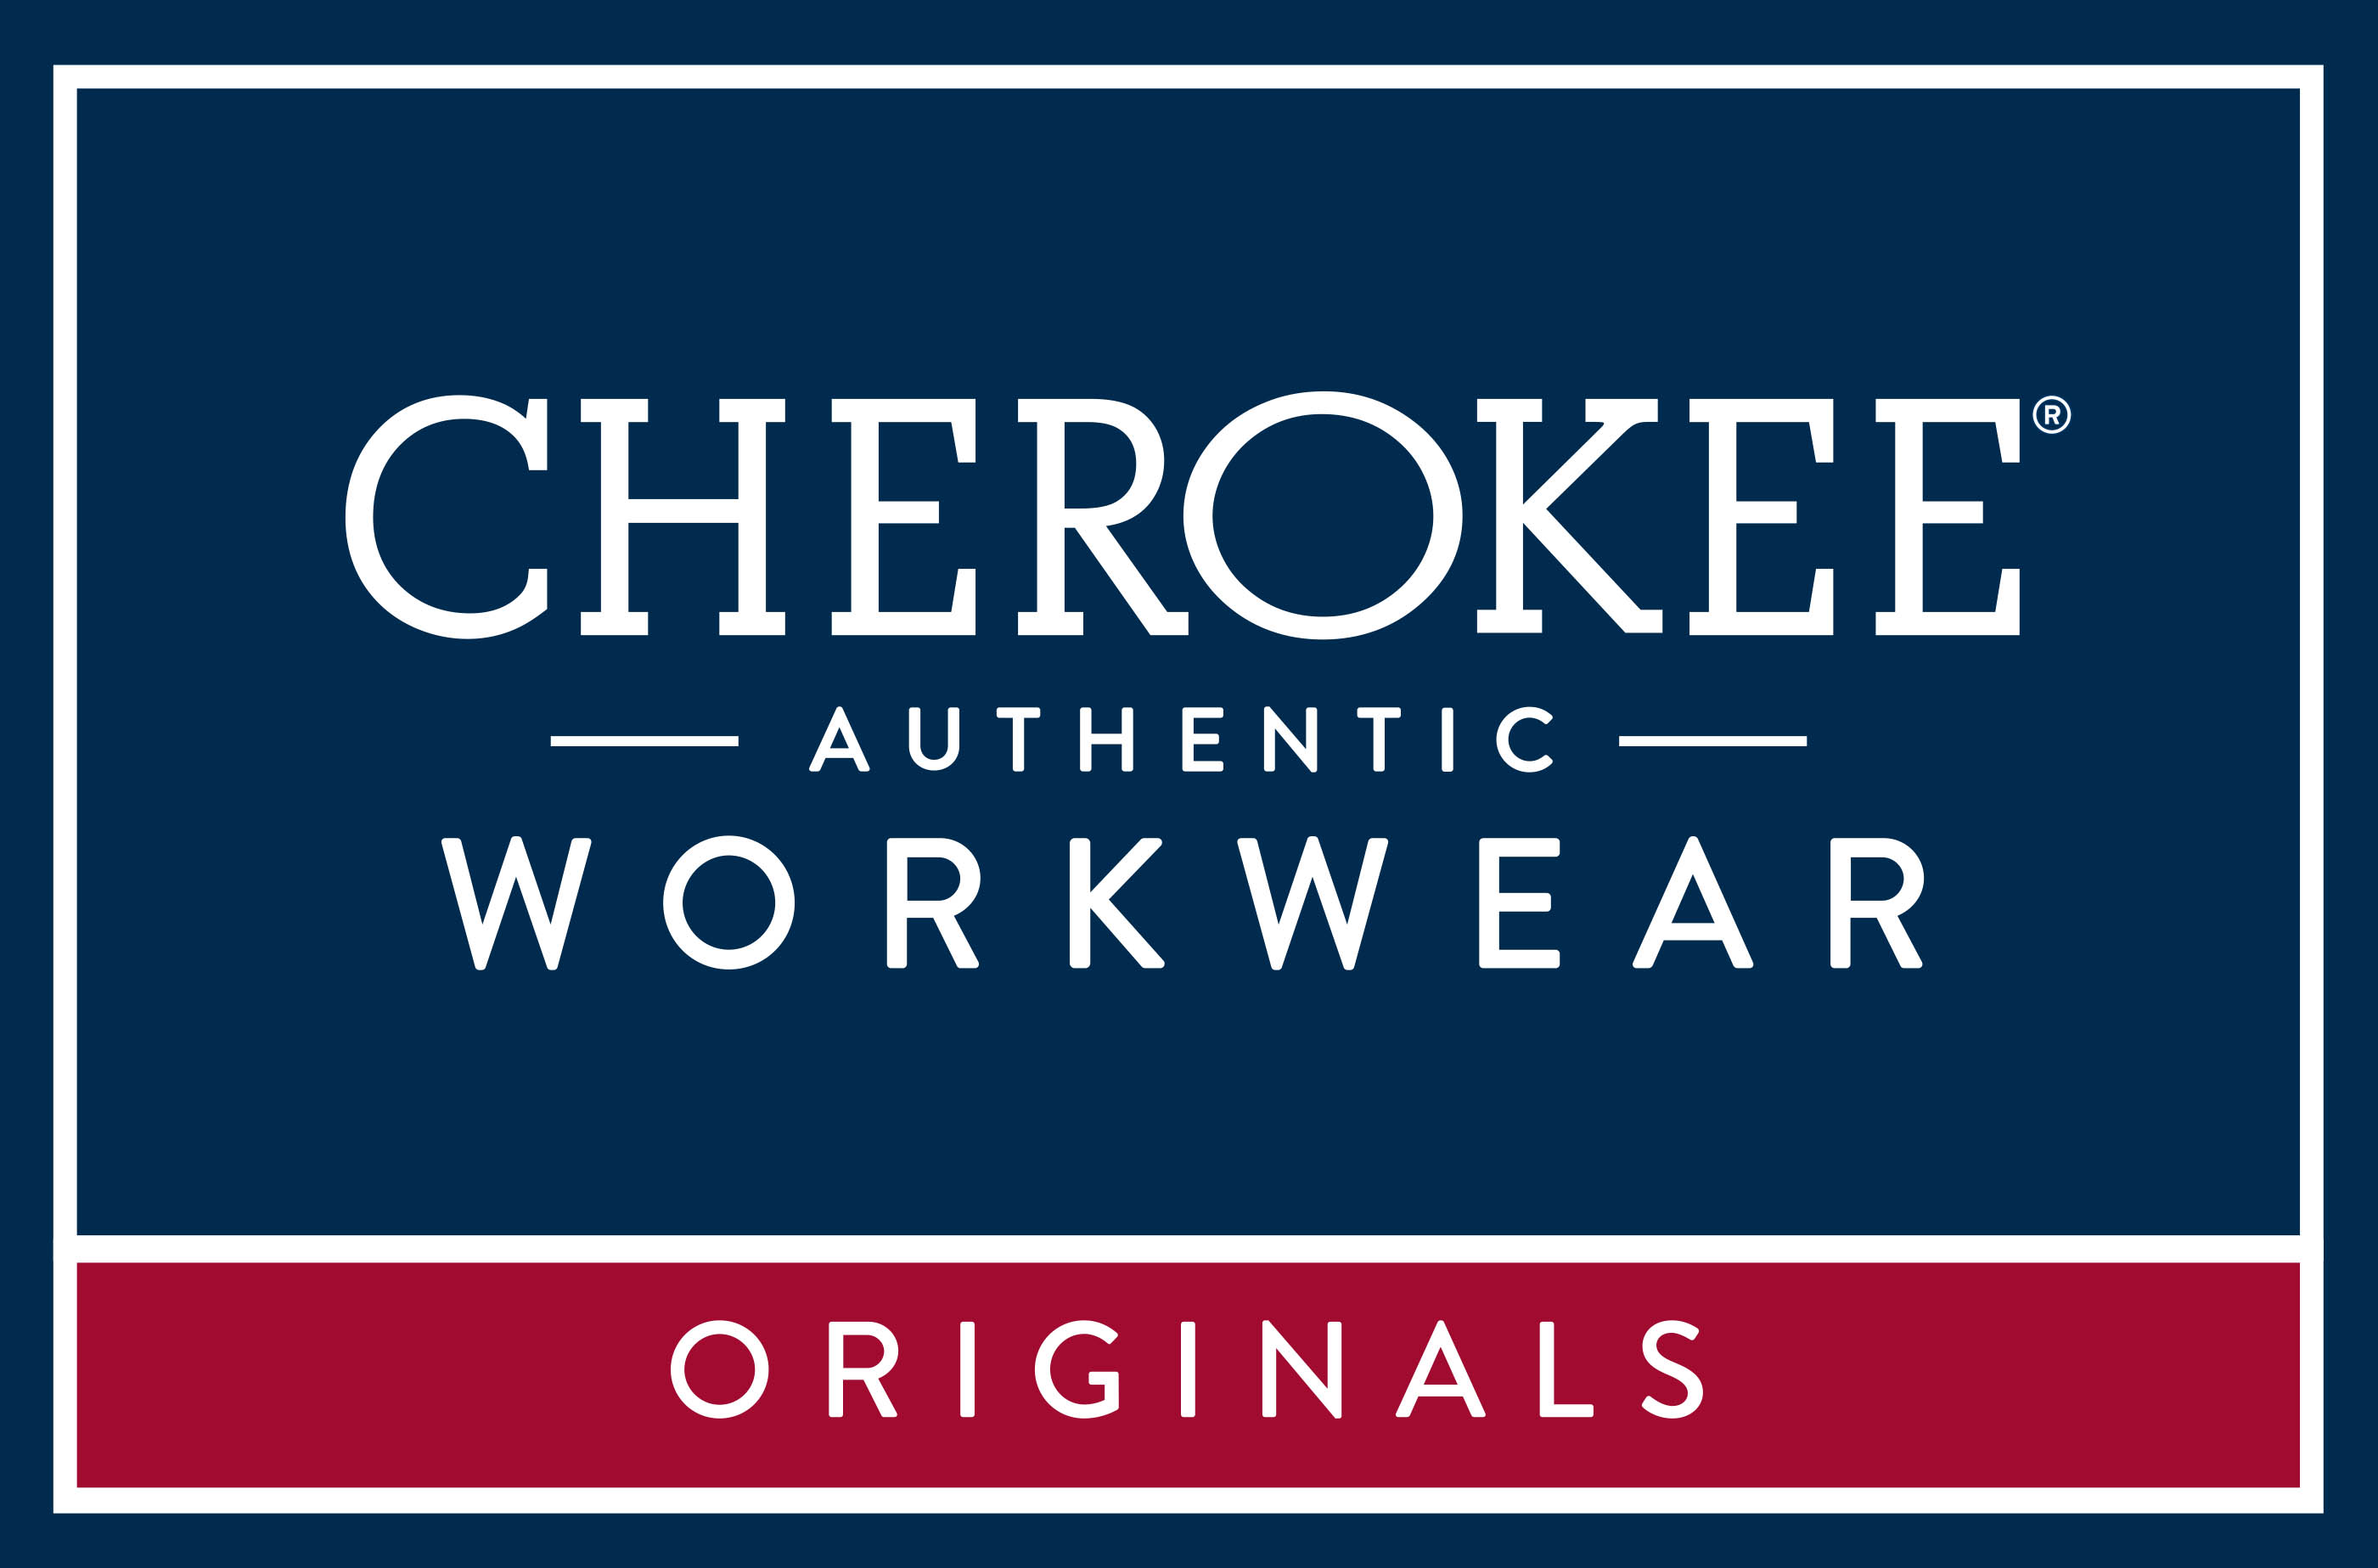 cherokee-workwear-originals-logo.jpg